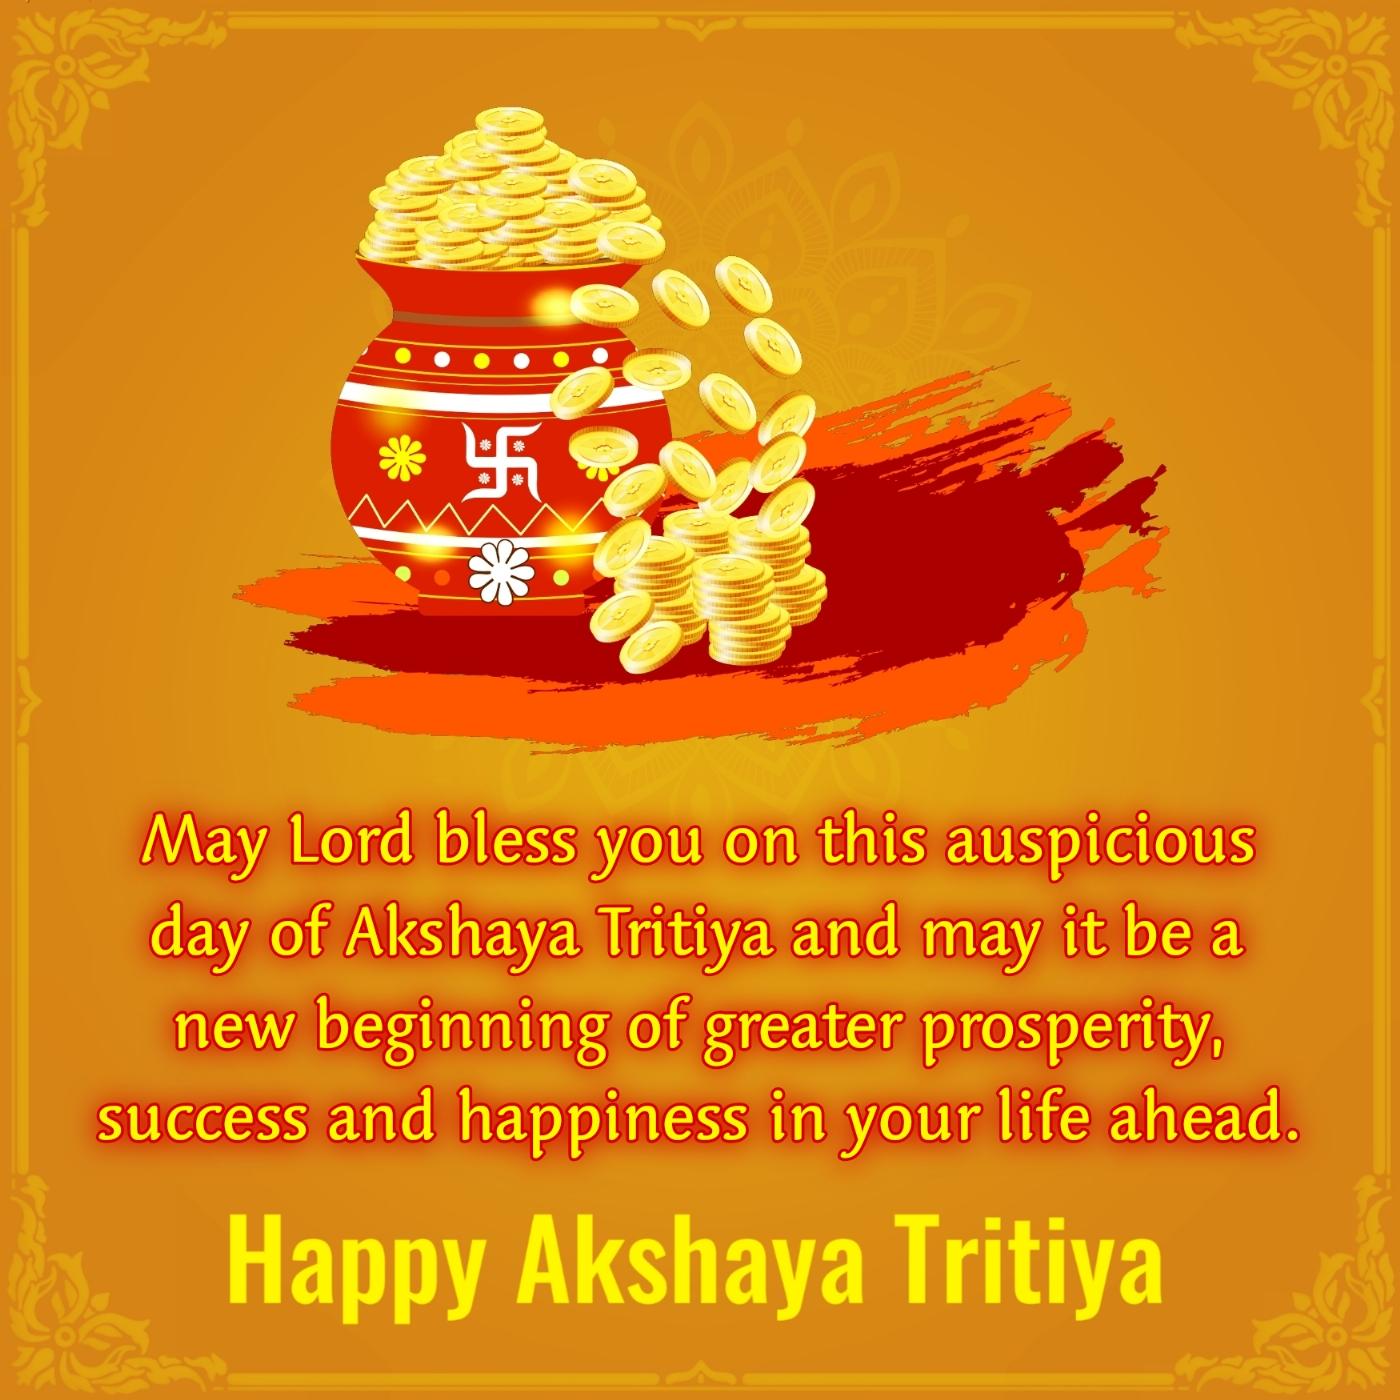 May Lord bless you on this auspicious day of Akshaya Tritiya